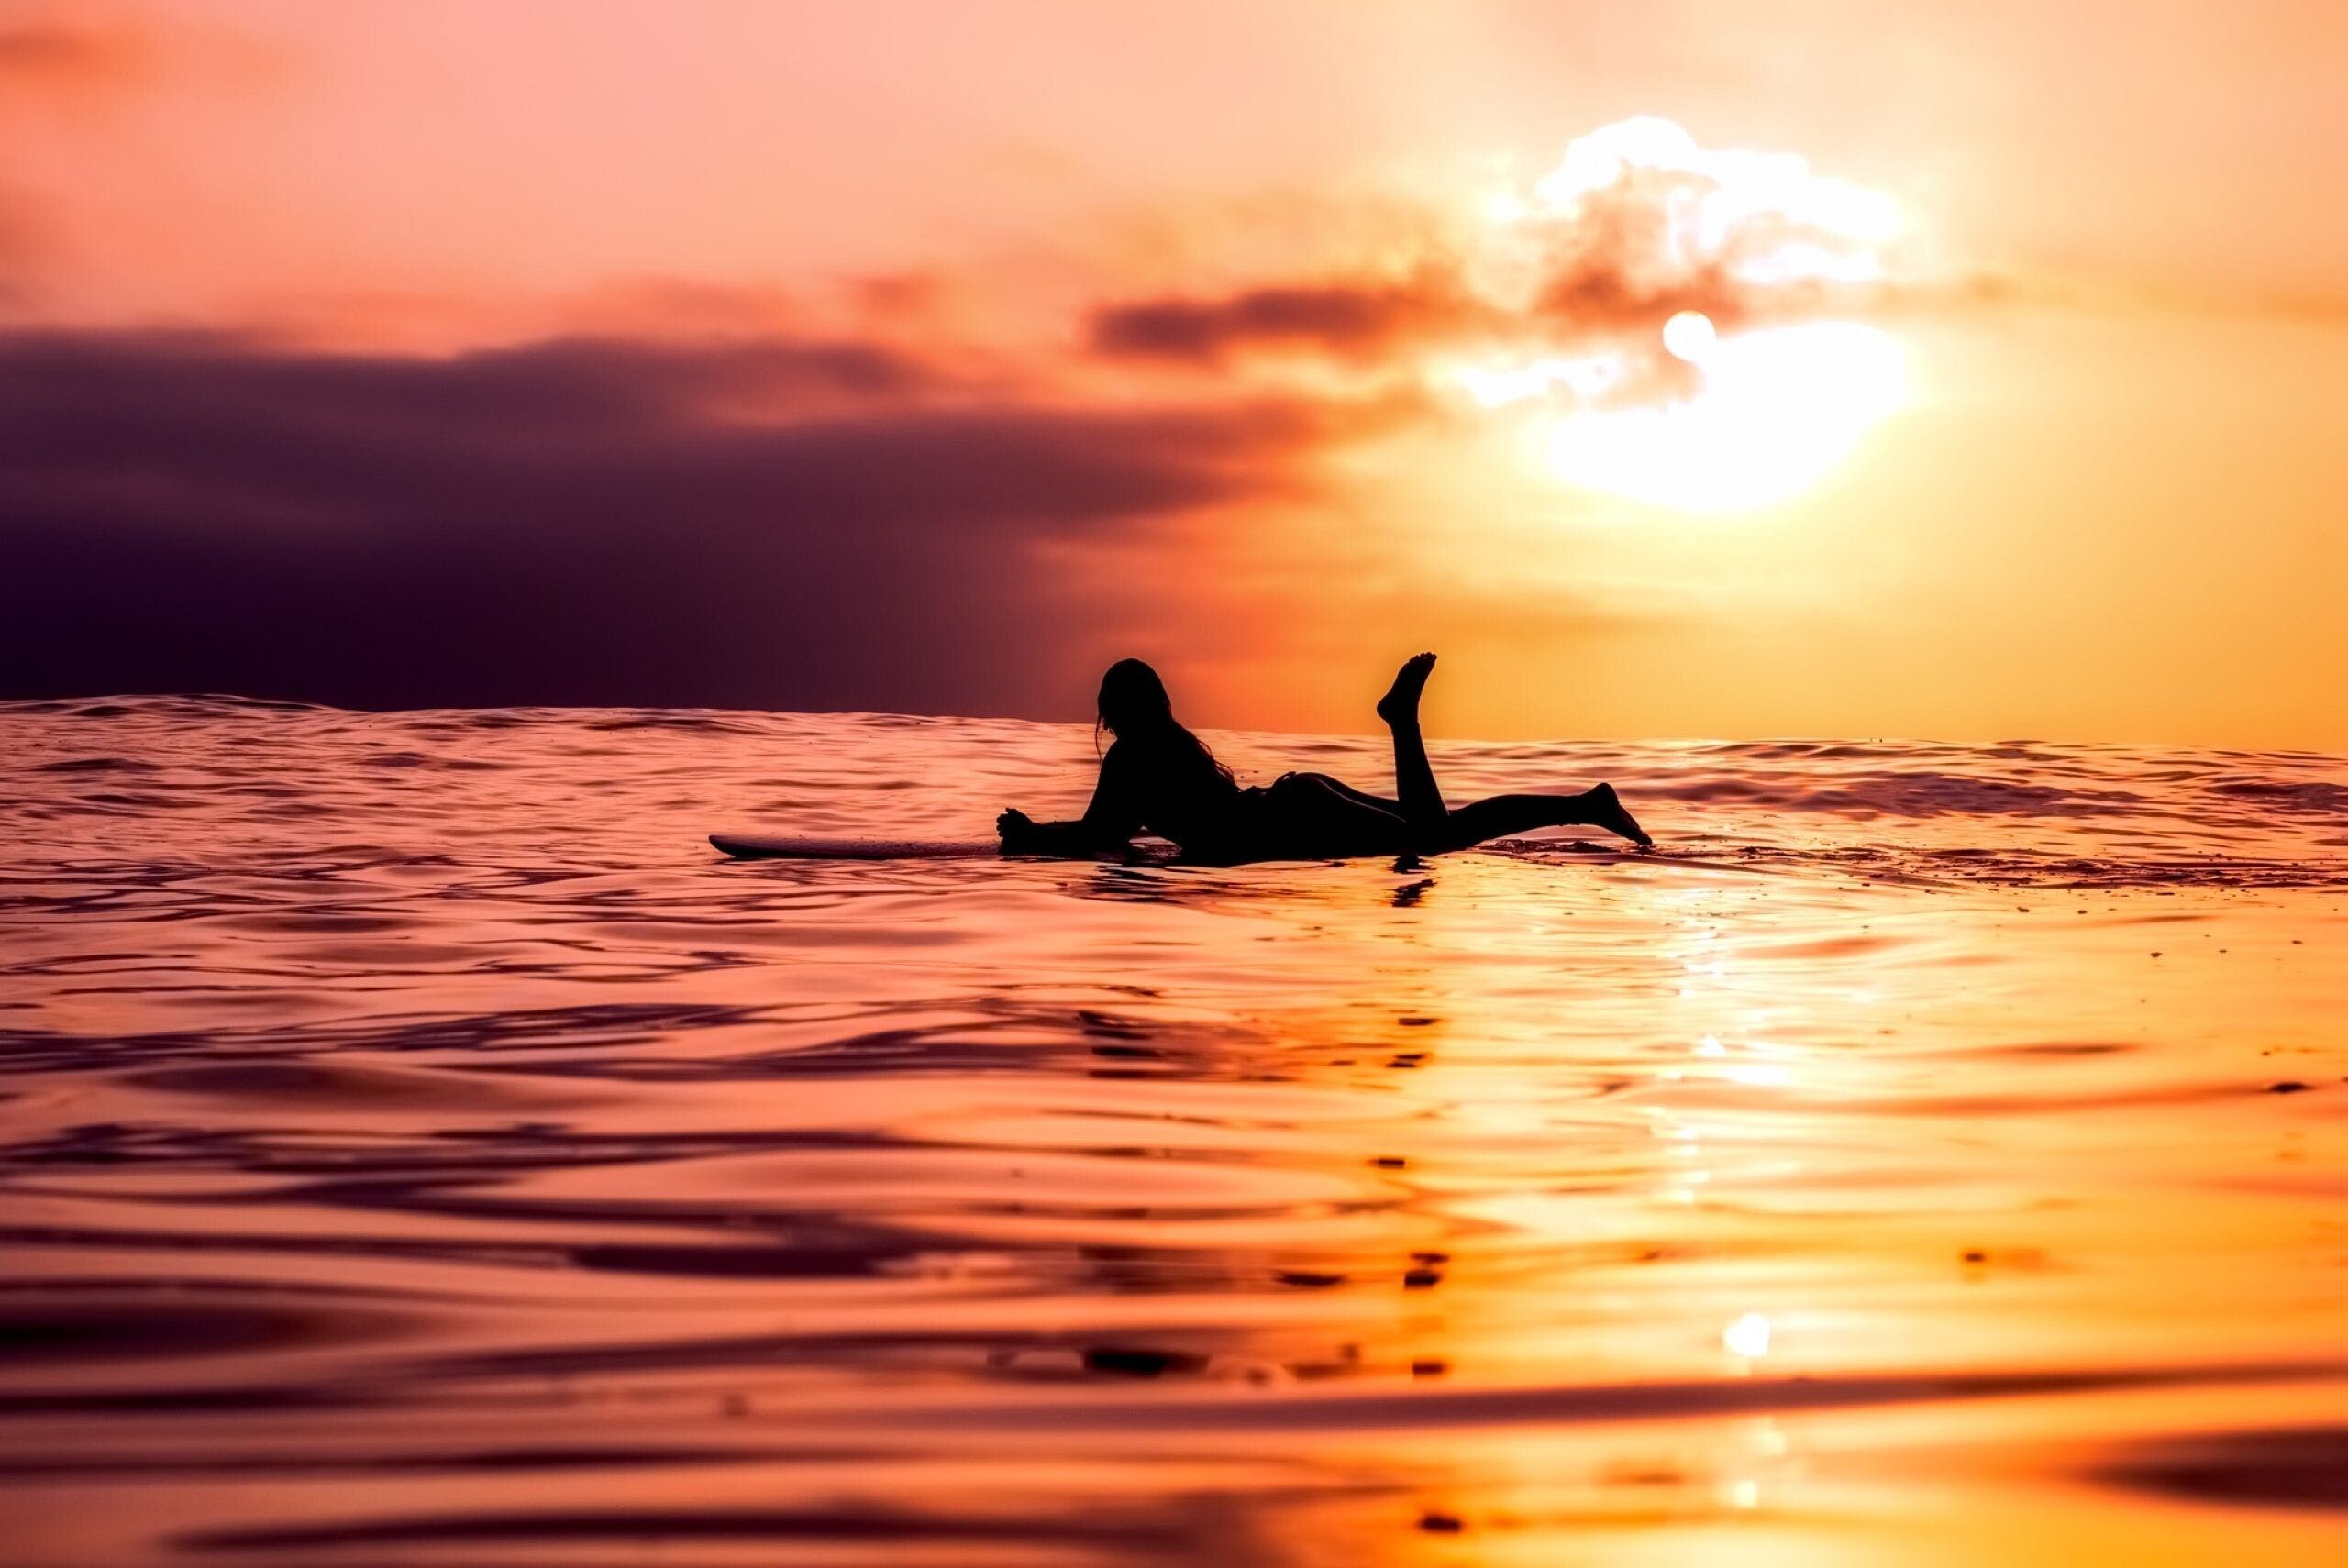 Girl Surfing: Recreational water sports at sunset, Ocean shores water. 2560x1710 HD Wallpaper.